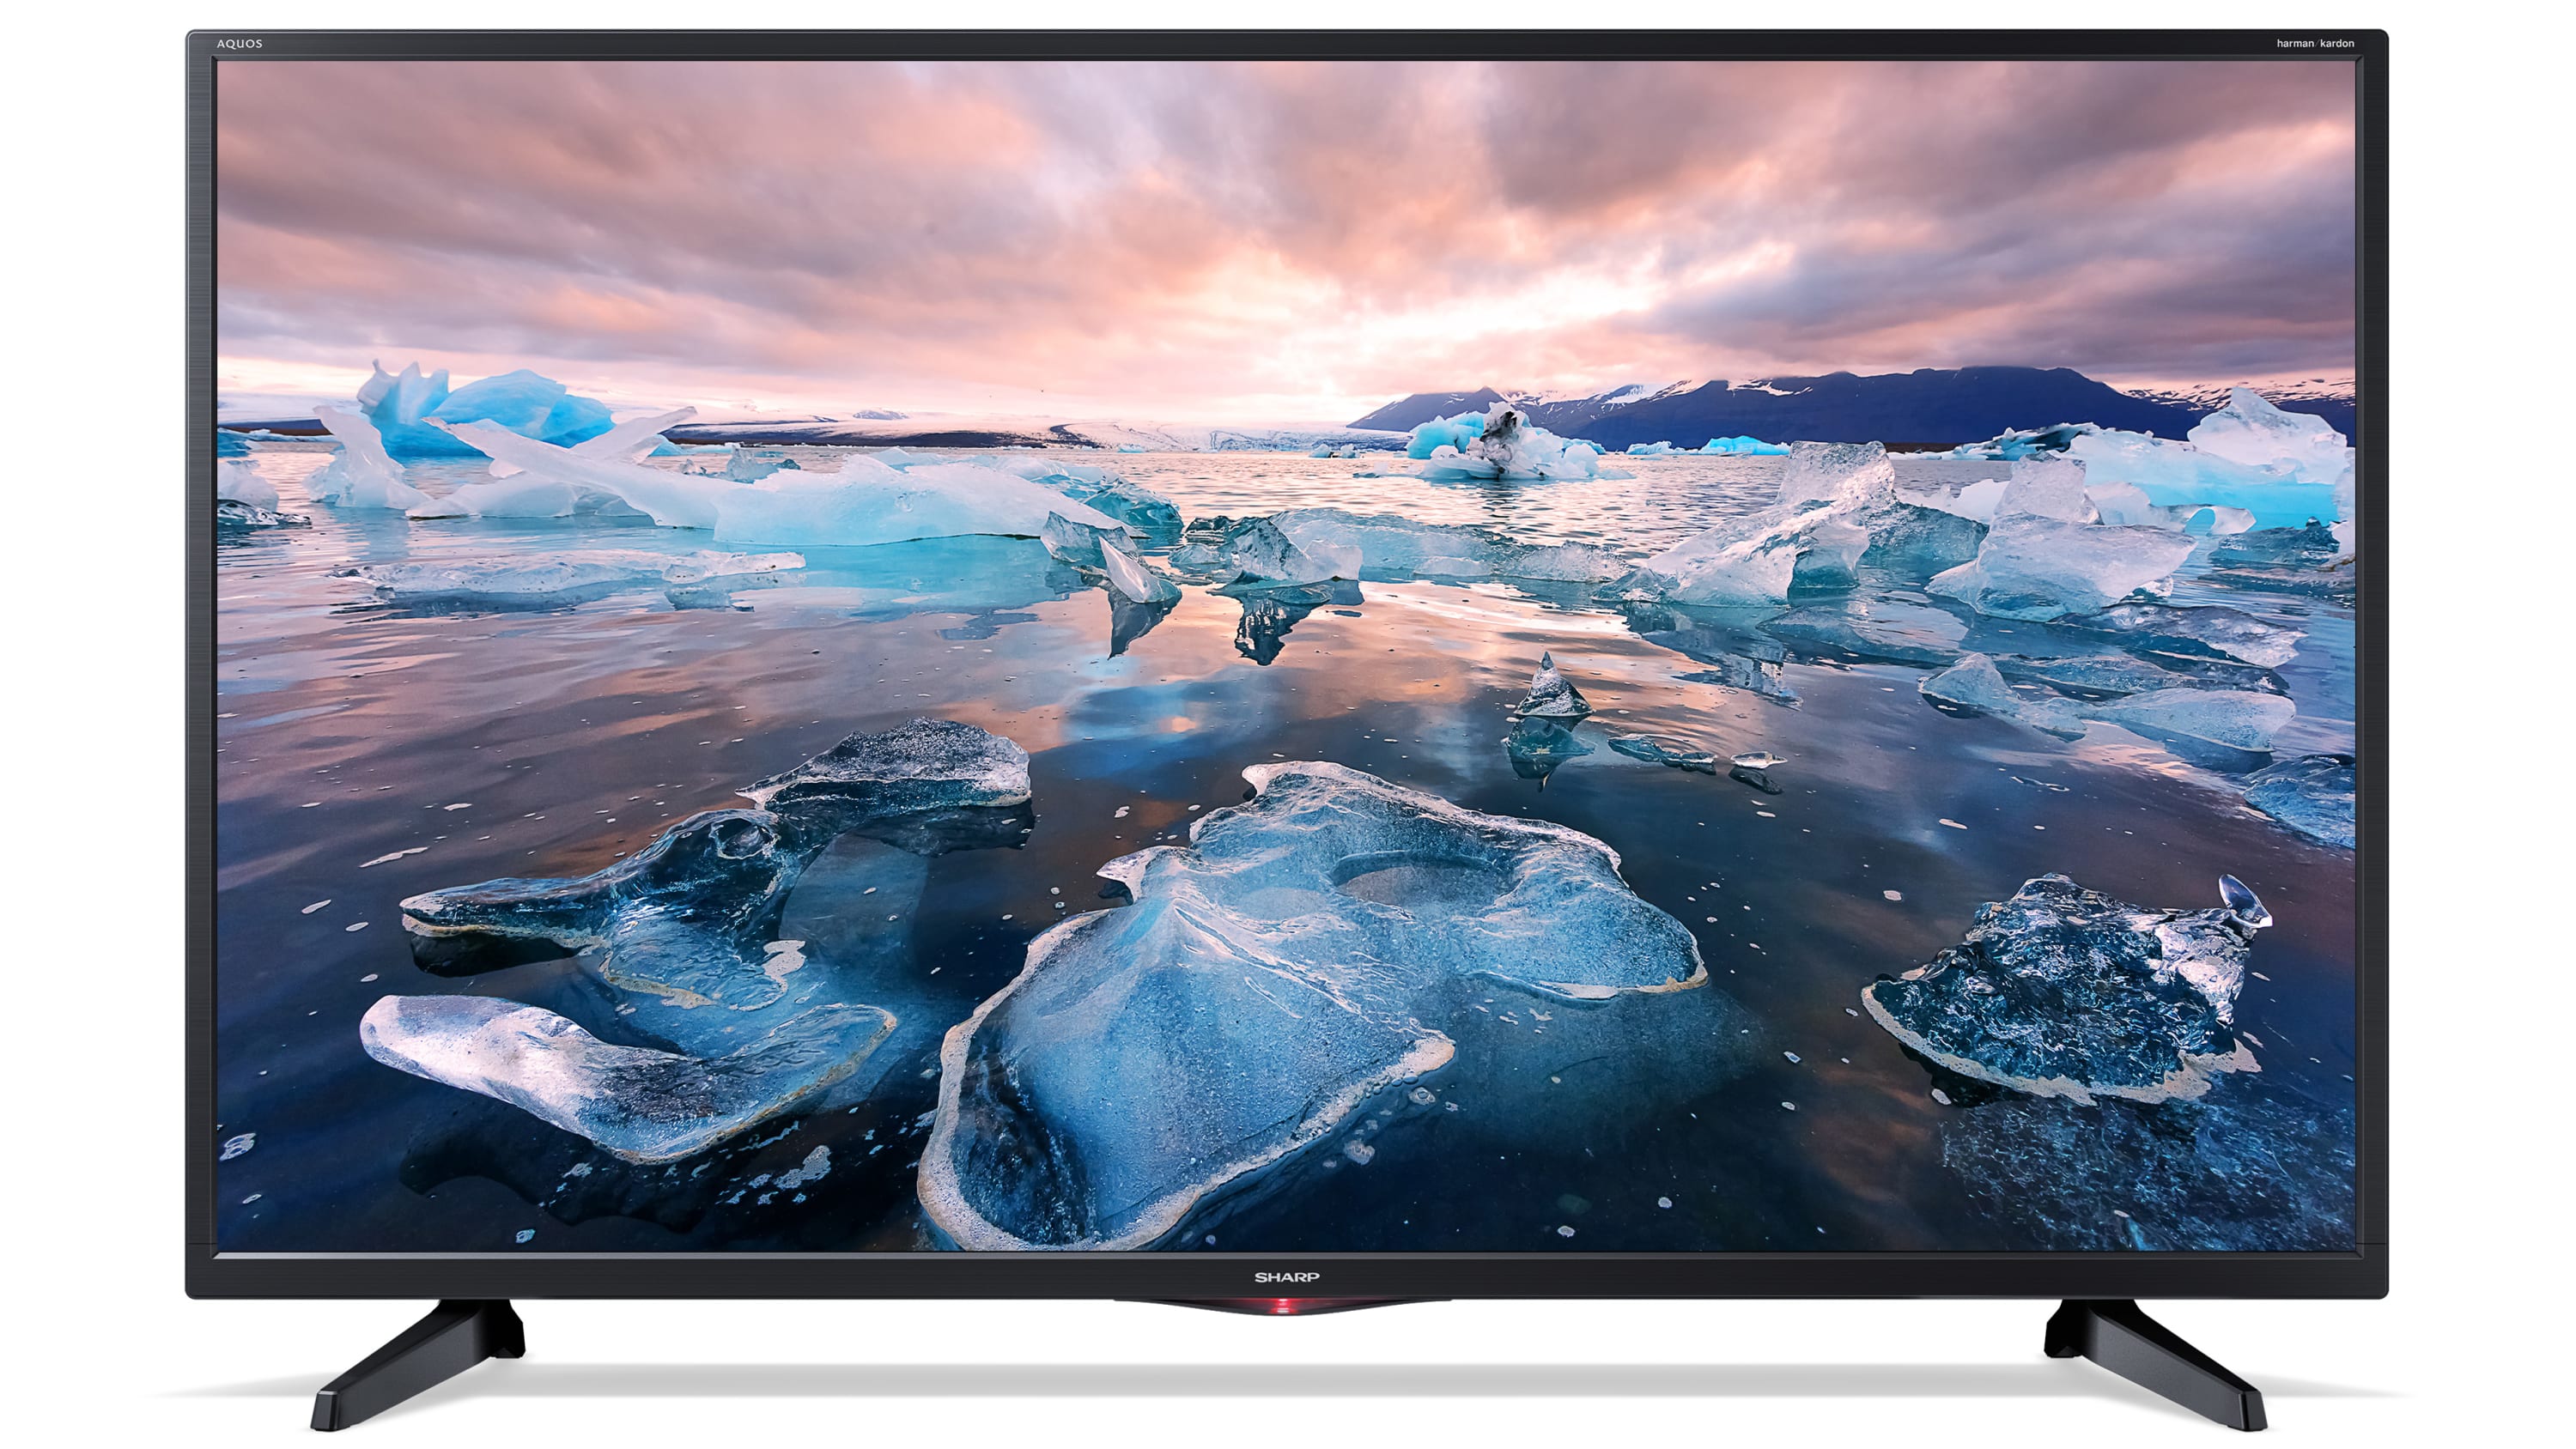 Smart-tv HD/Full HD - 40" FULL HD SMART